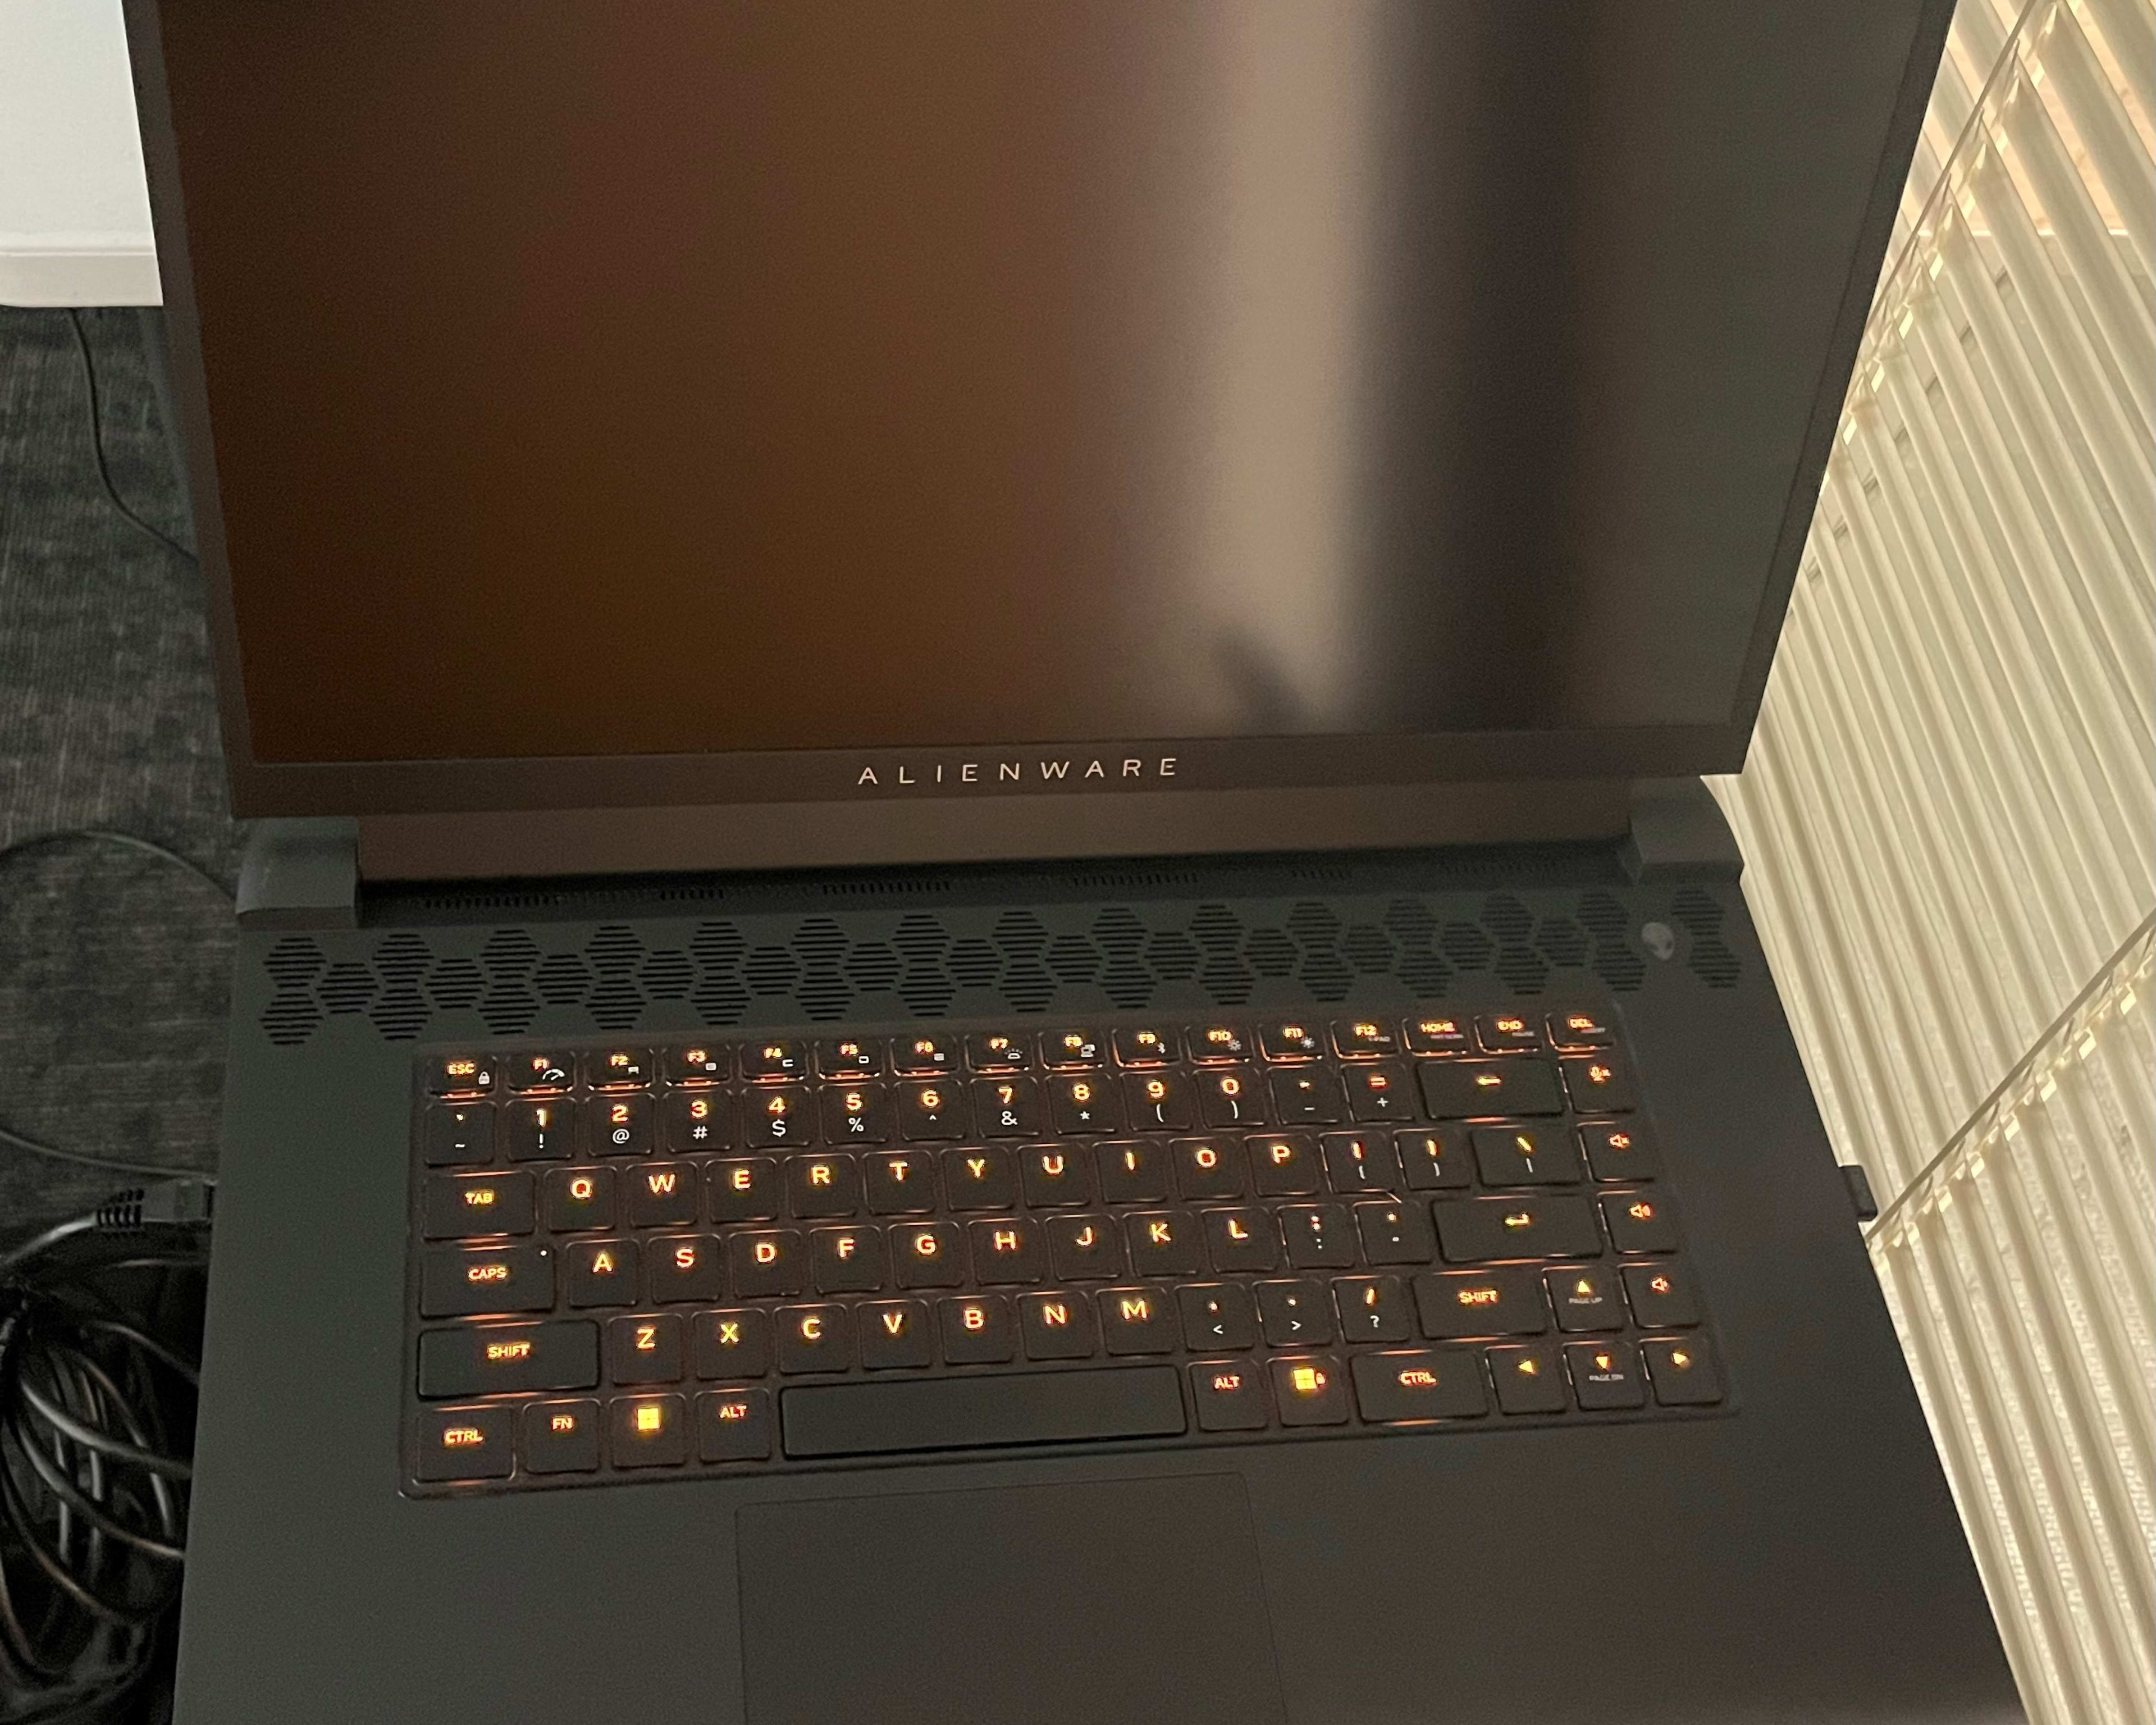 Alienware M17 Gaming Laptop